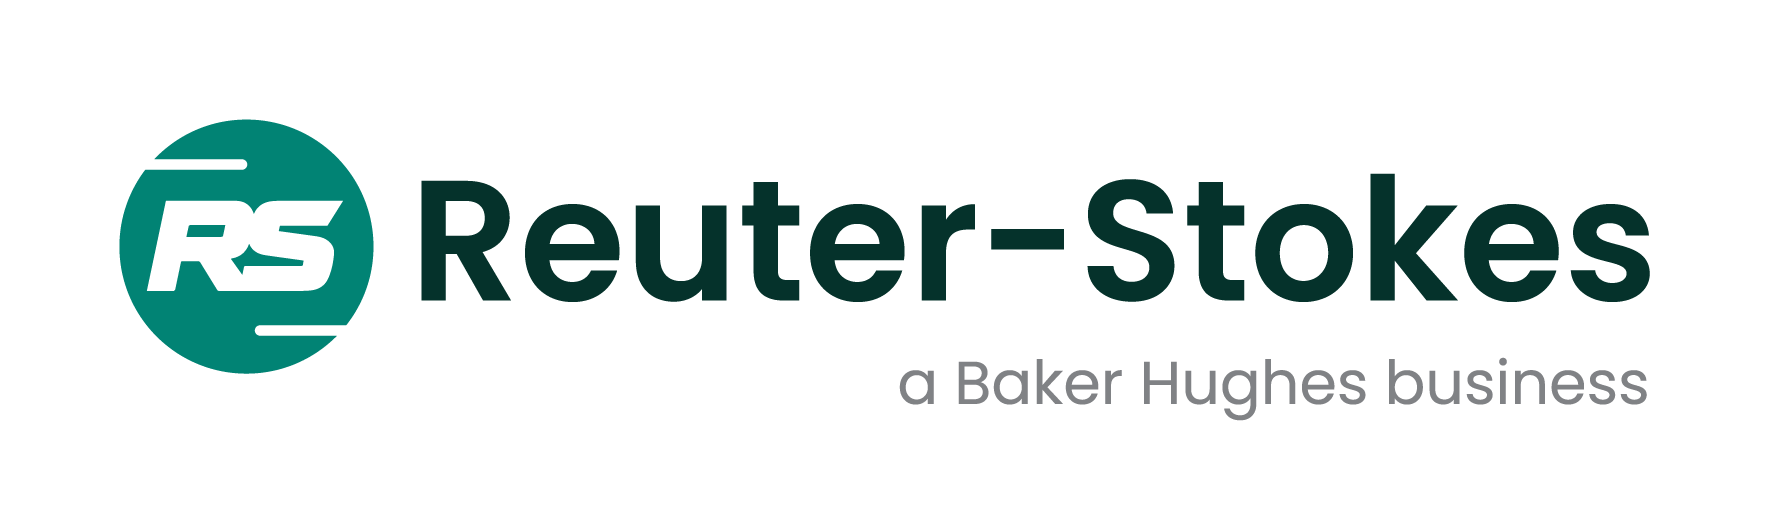 Reuter-Stokes, a Baker Hughes business Início